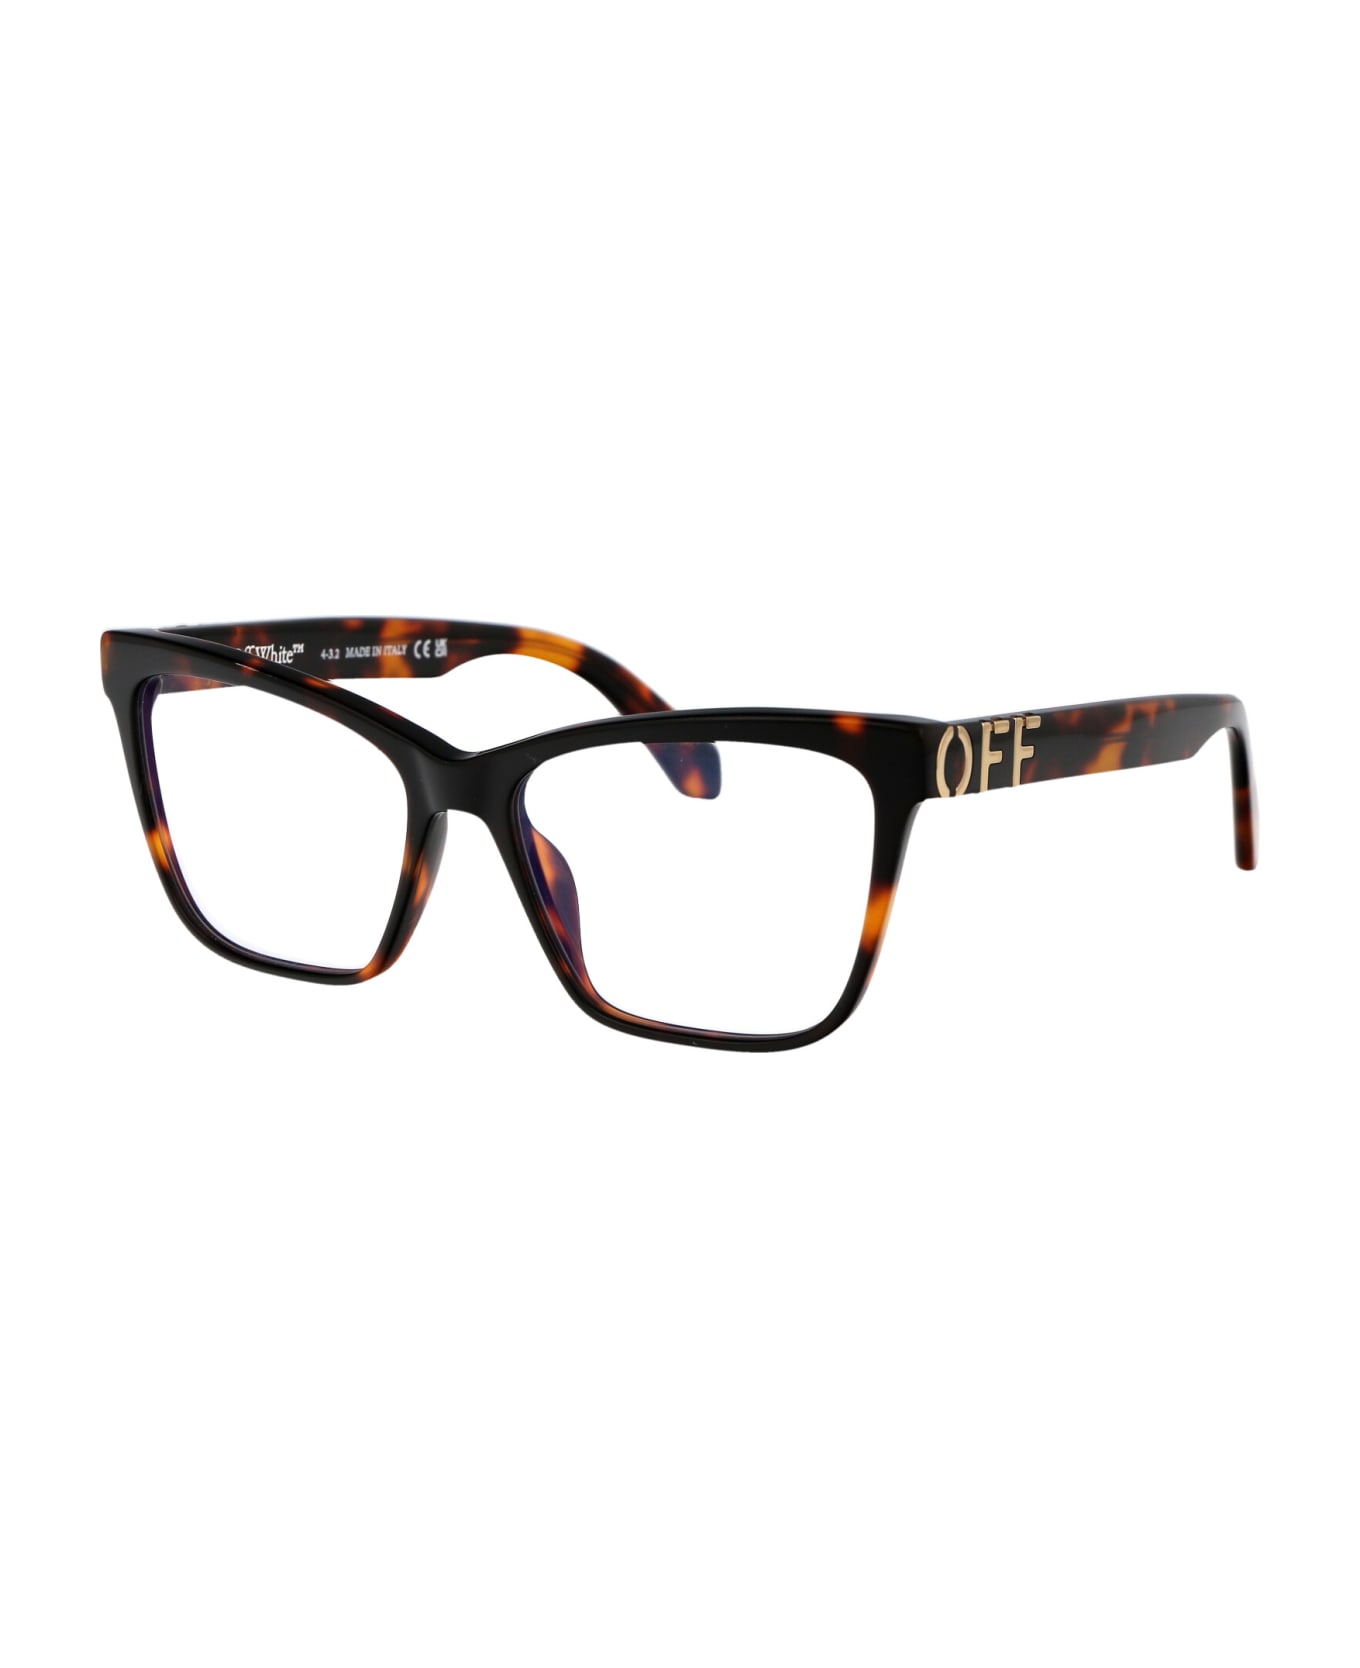 Off-White Optical Style 67 Glasses - 6000 HAVANA